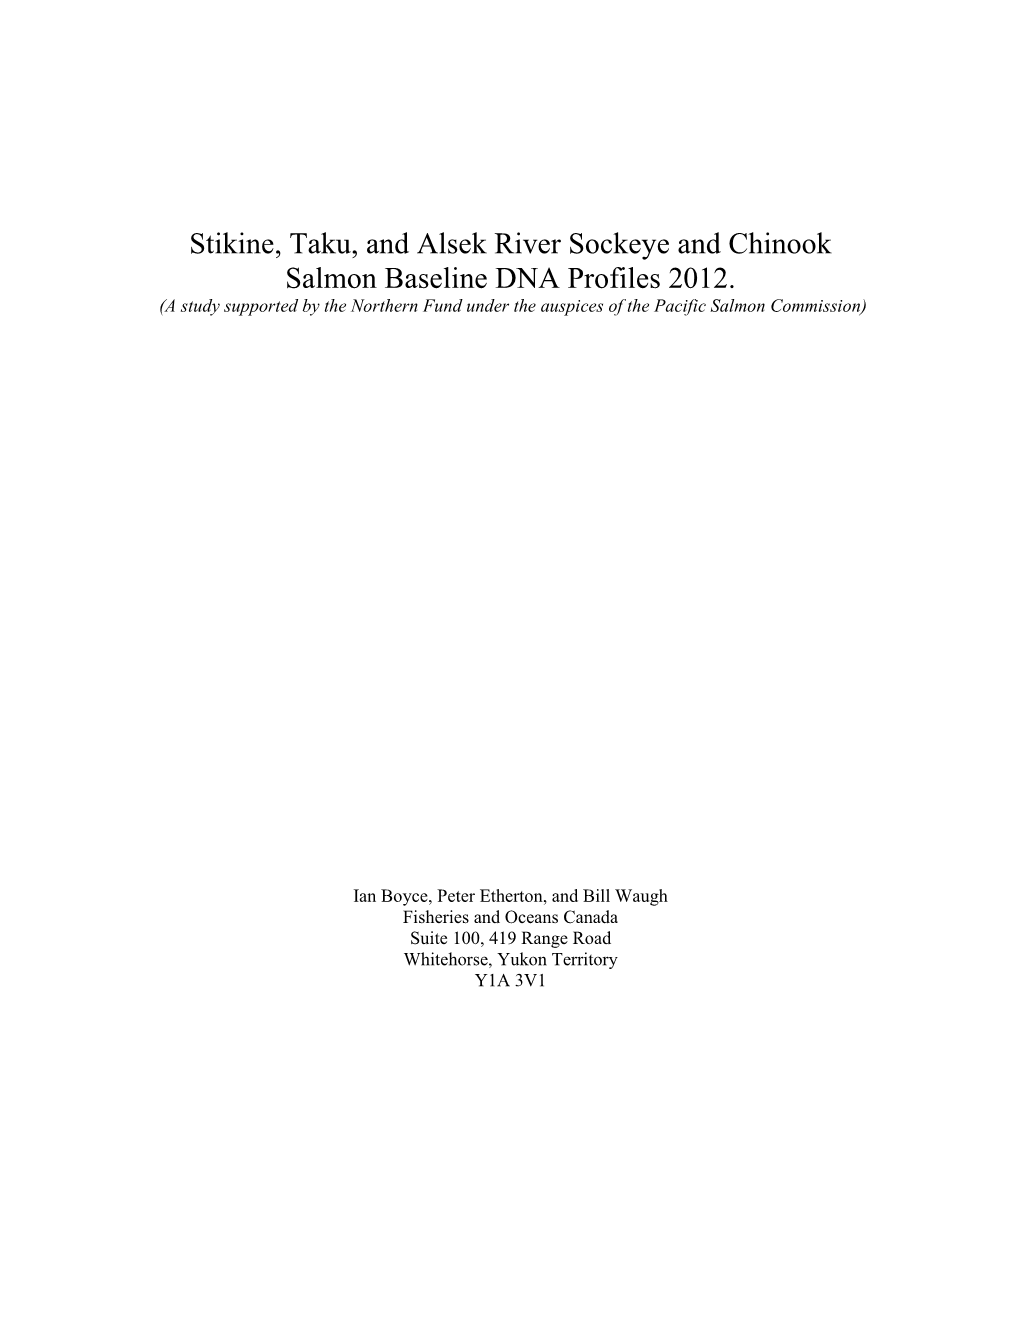 Stikine, Taku, and Alsek River Sockeye and Chinook Salmon Baseline DNA Profiles 2012